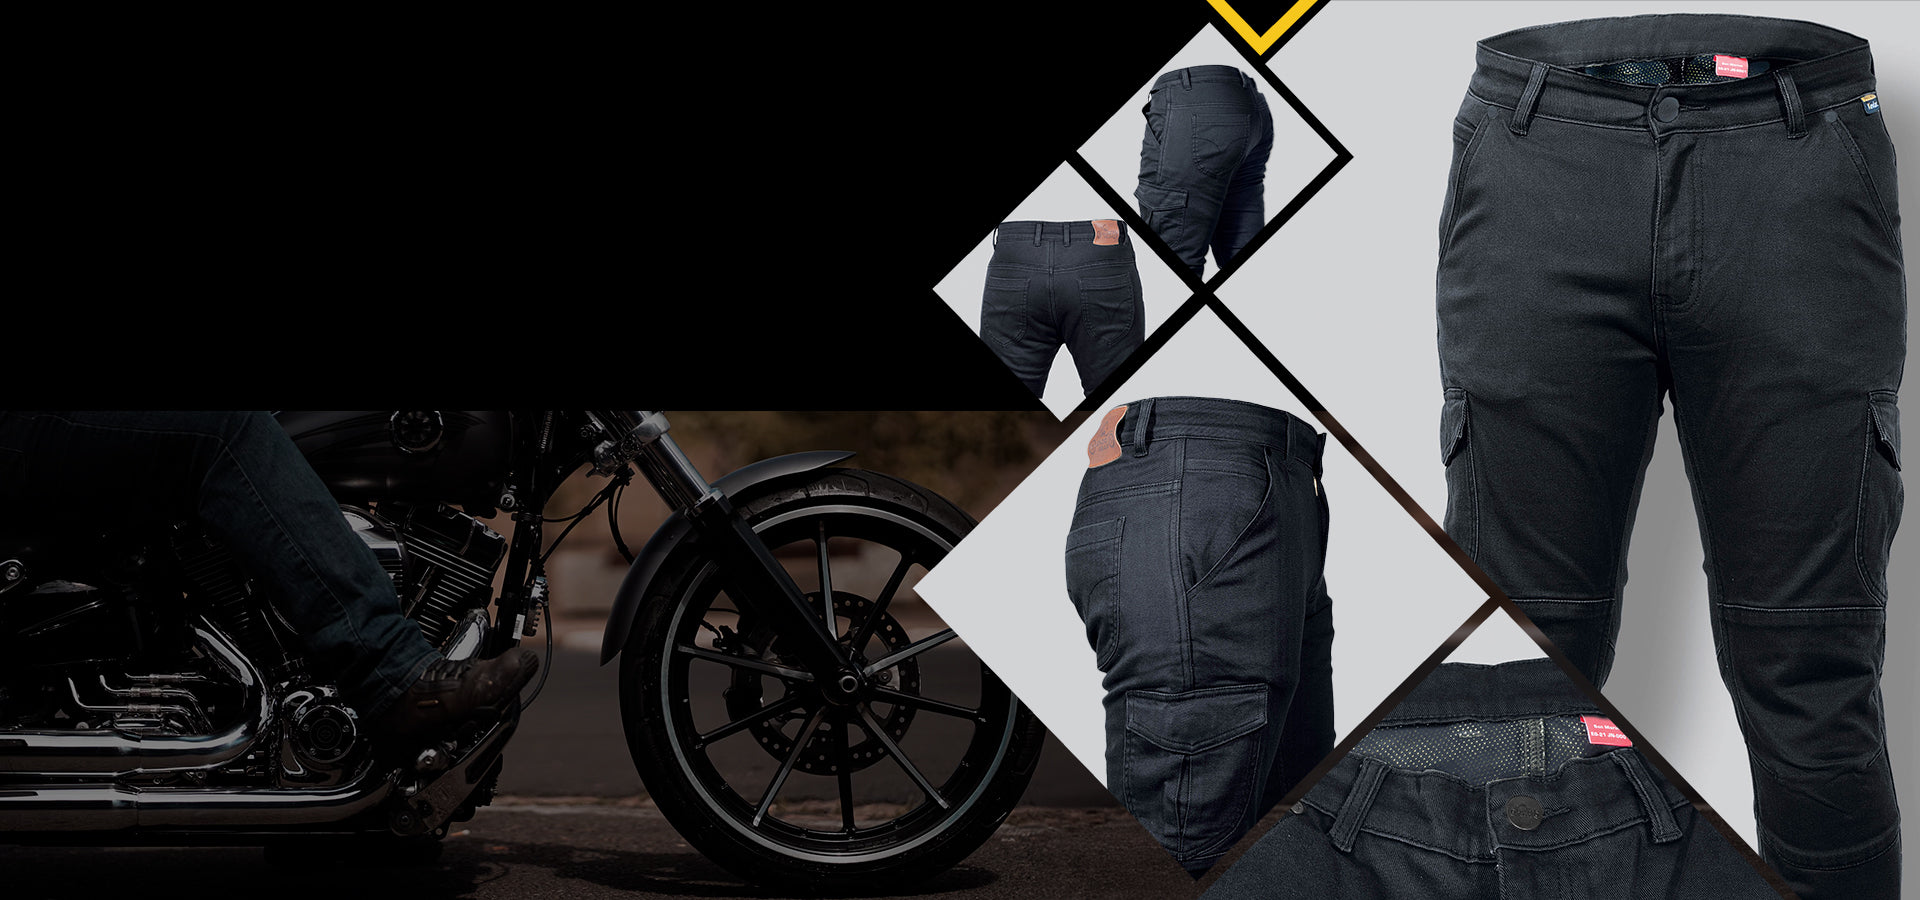 Men Best Kevlar Reinforced Motorcycle Jeans - EndoGear